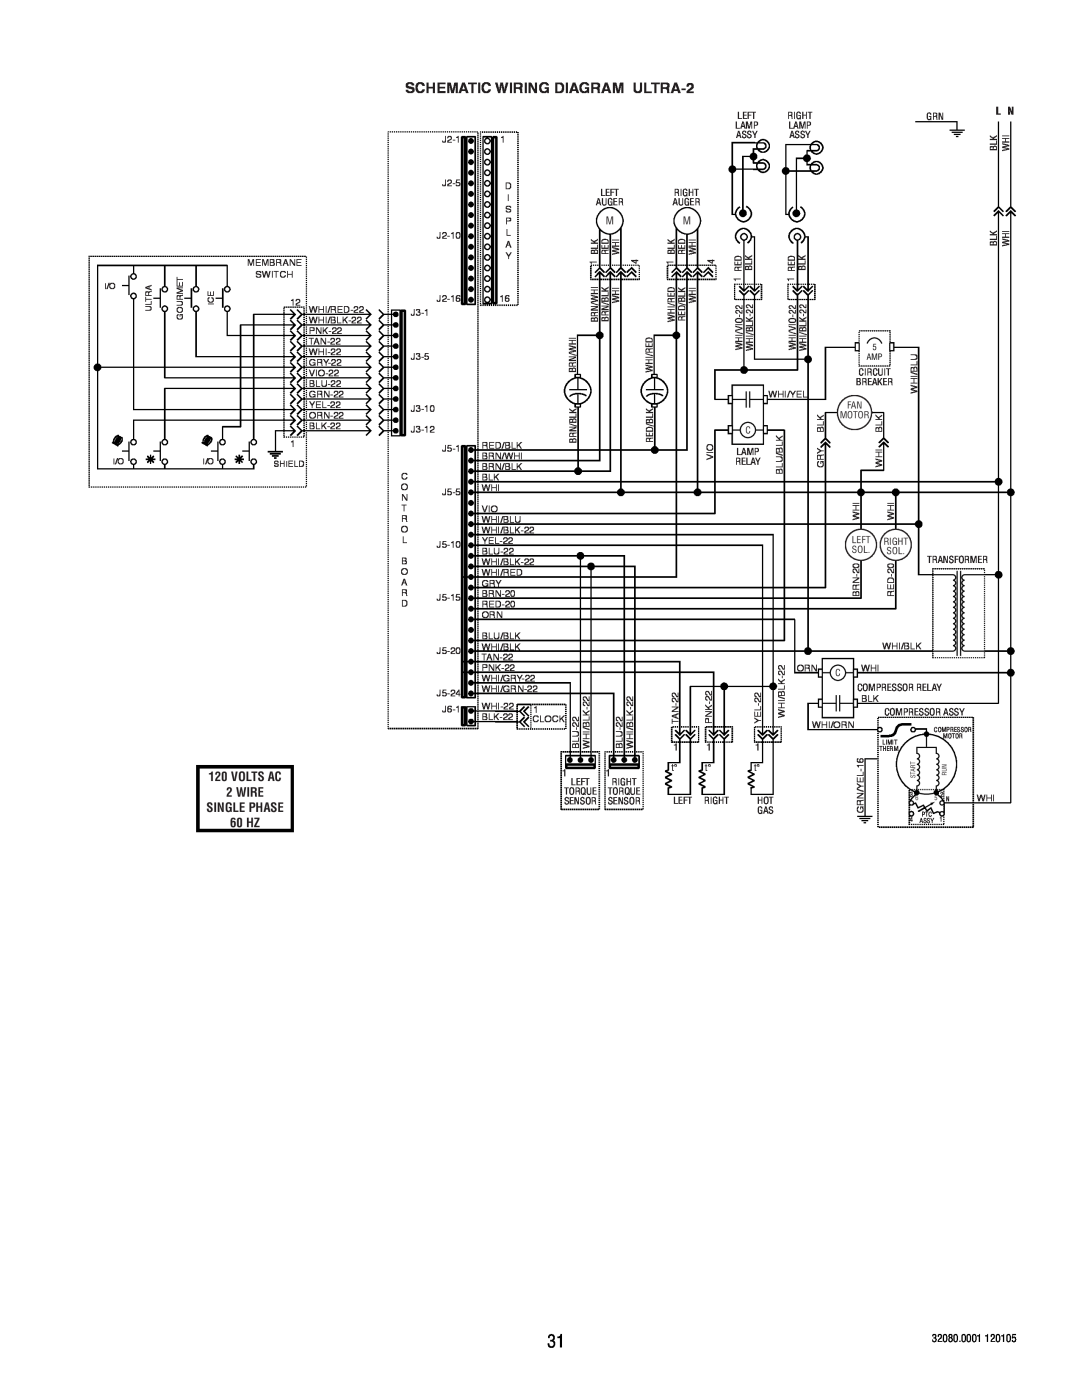 Bunn manual SCHEMATIC WIRING DIAGRAM ULTRA-2, 32082.0000B, 01/02 2002 BUNN-O-MATIC CORPORATION 